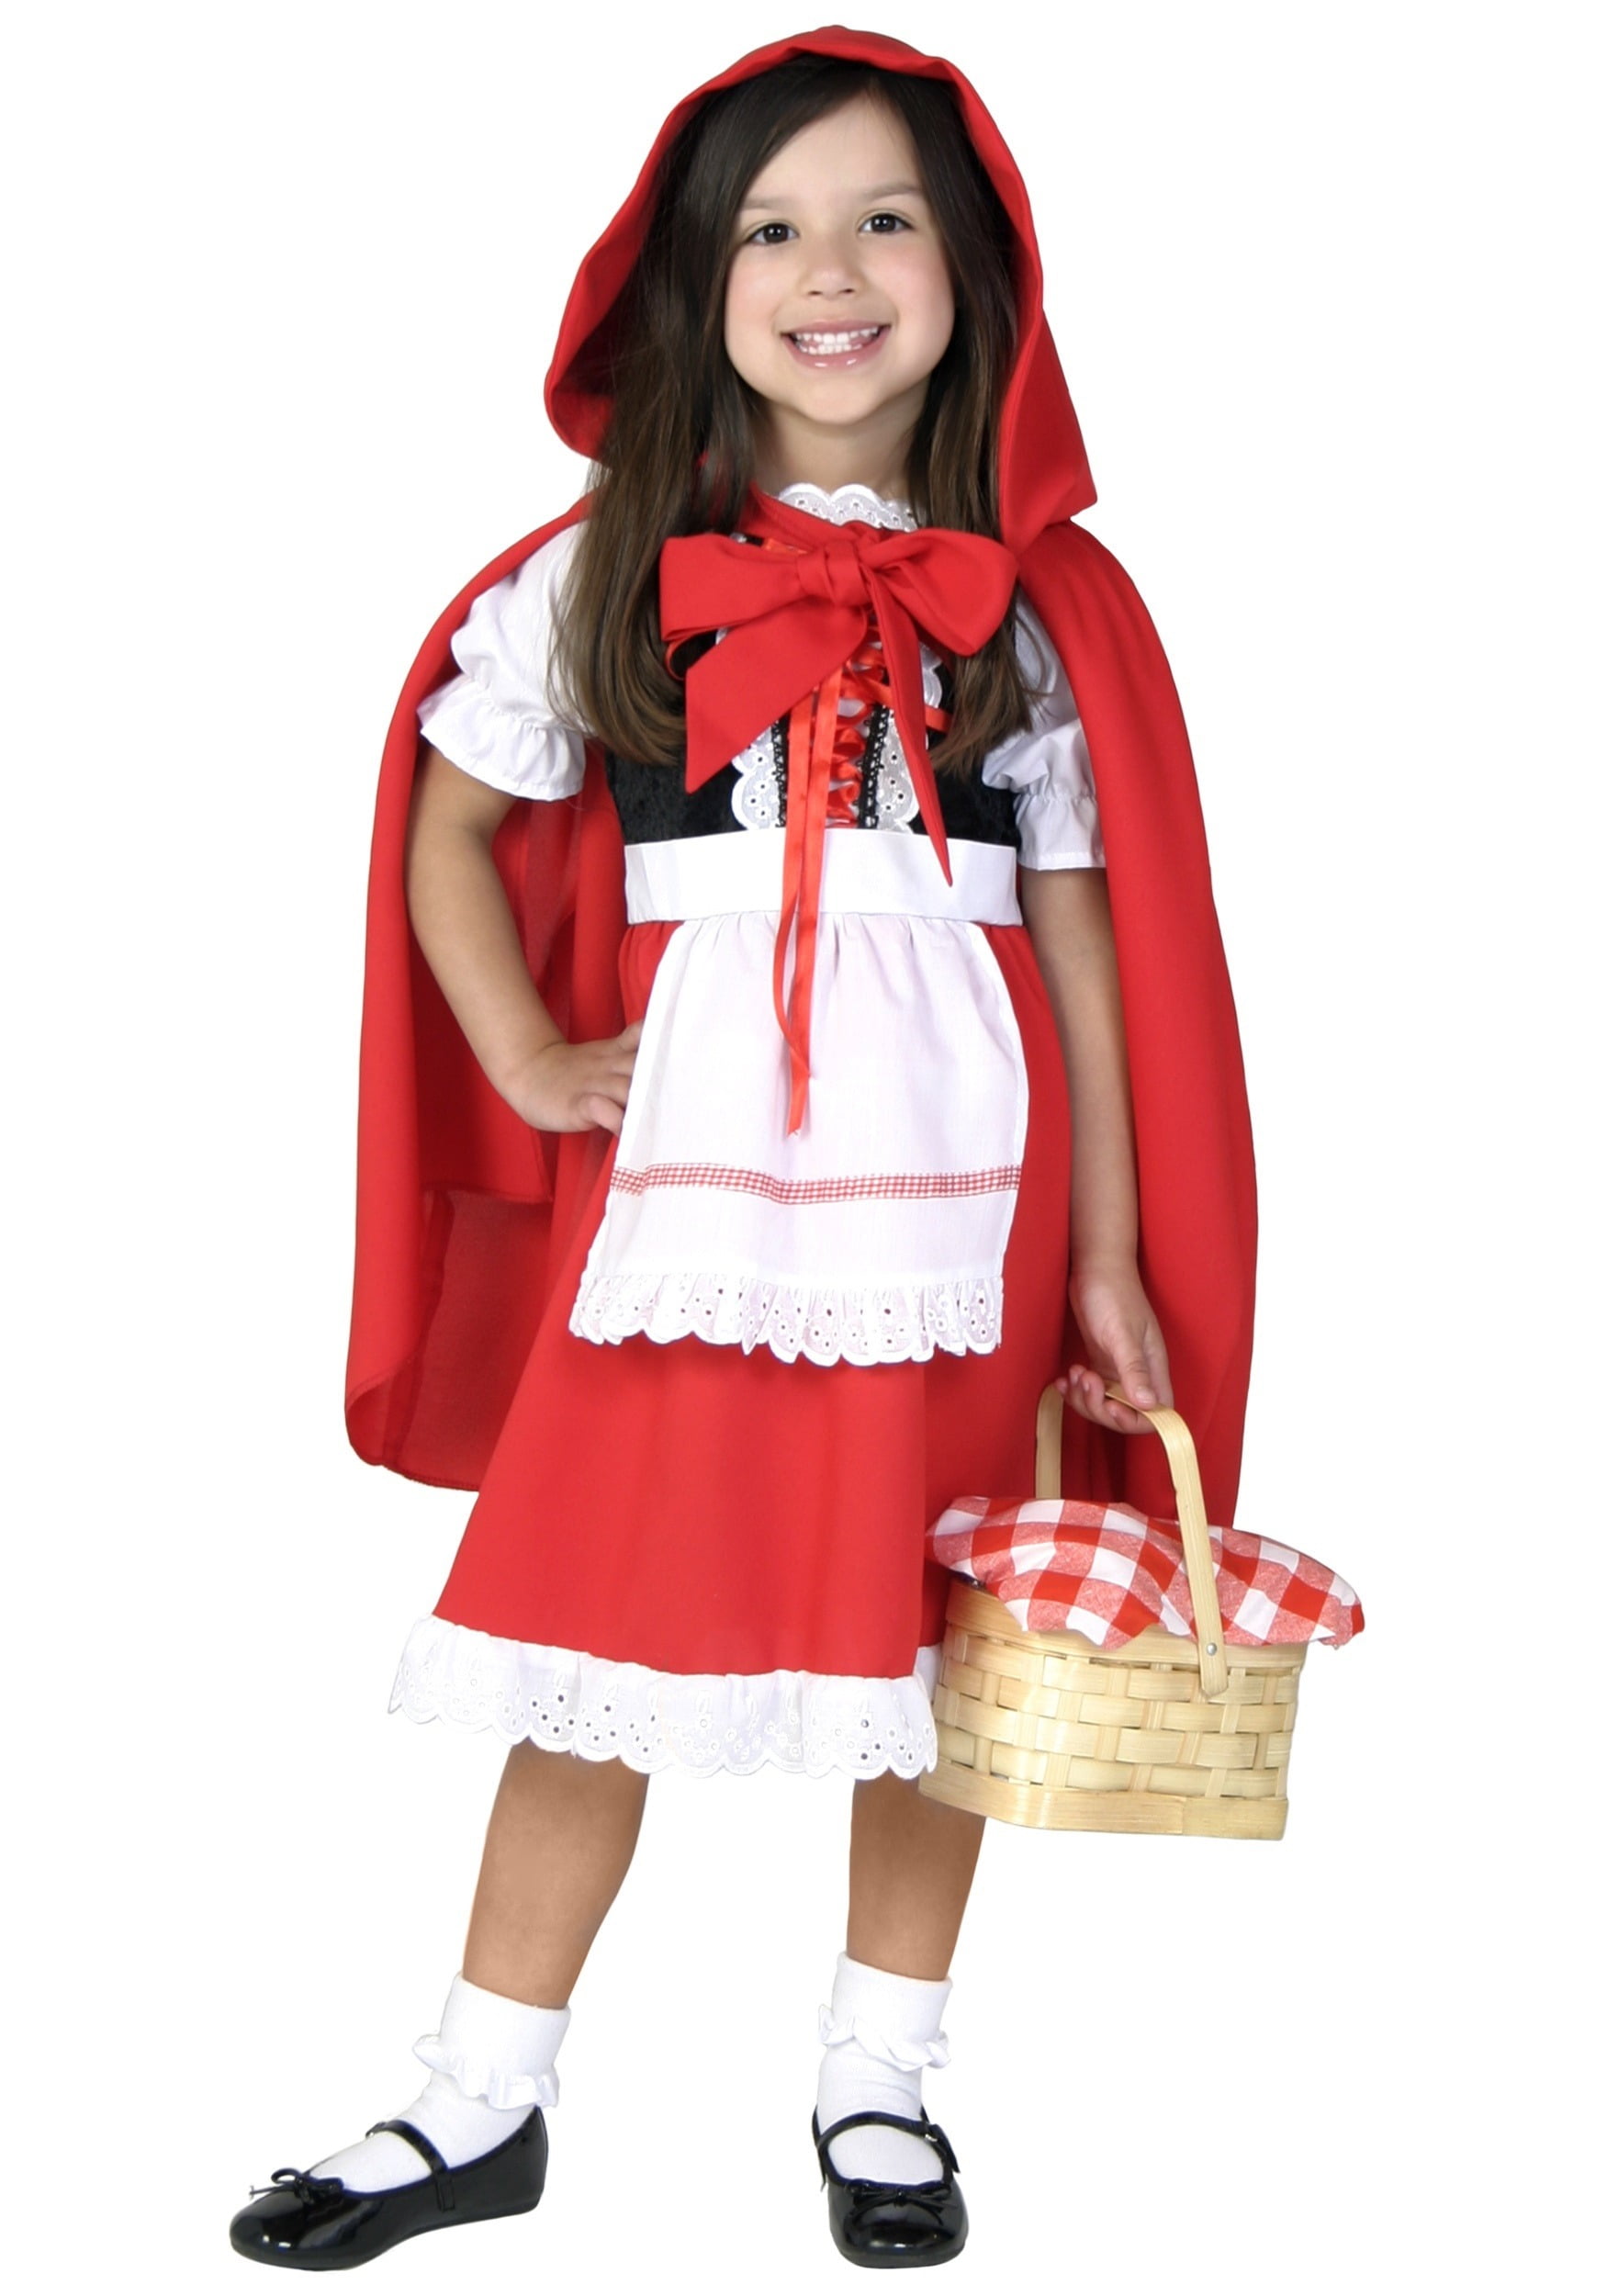 Storybook Red Riding Hood Girls Fancy Dress World Book Day Kids Children Costume 